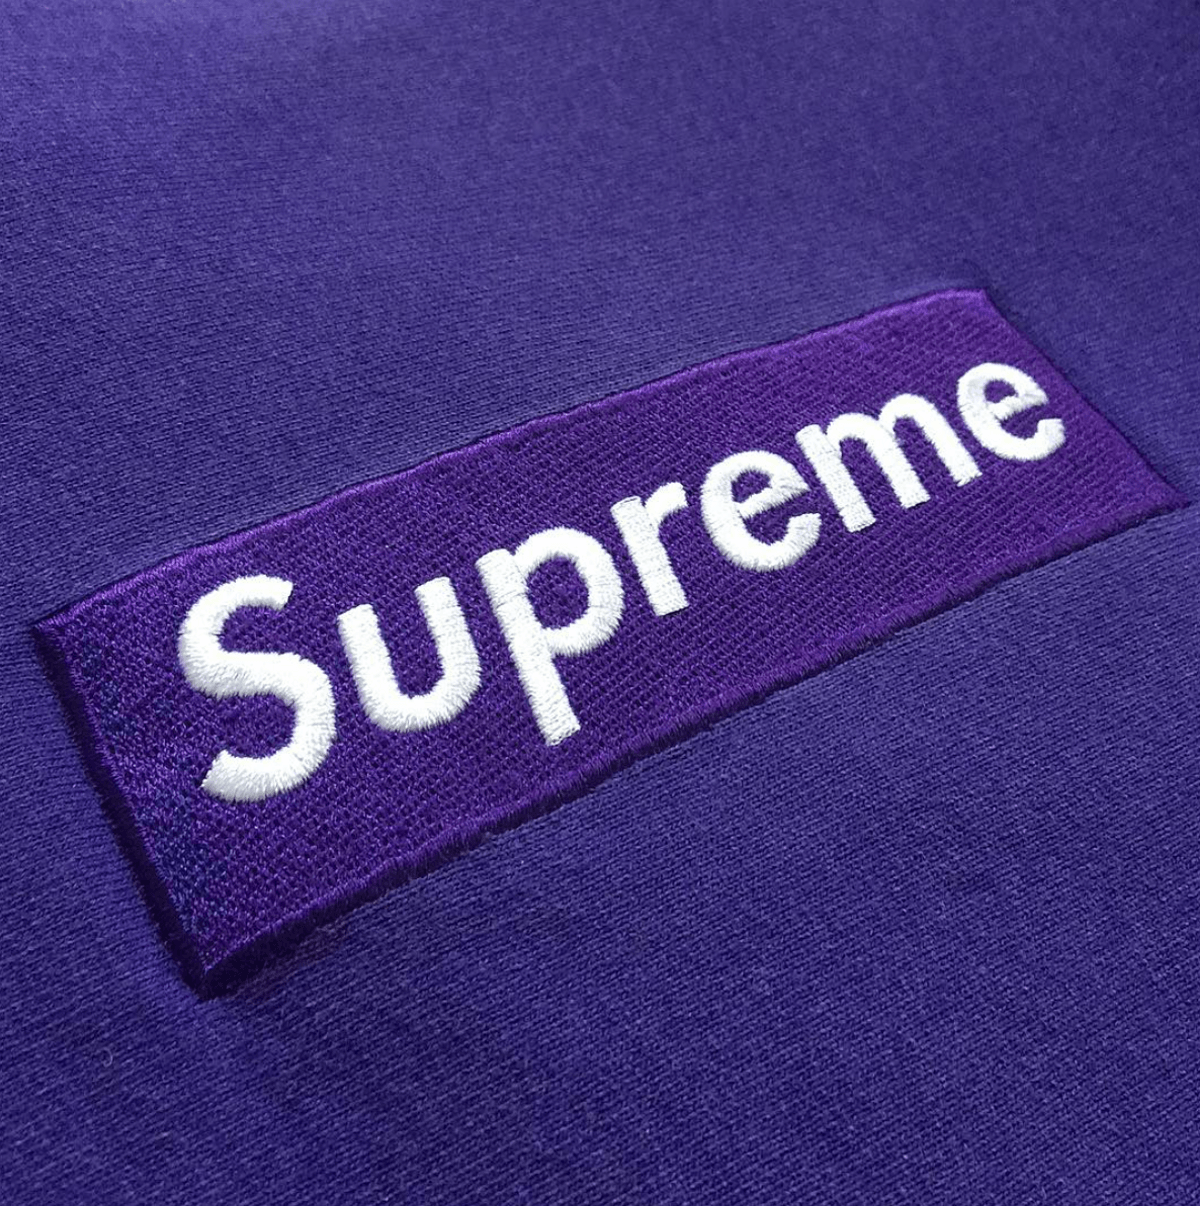 Supreme box logo. Бокс лого Суприм фиолетовое.